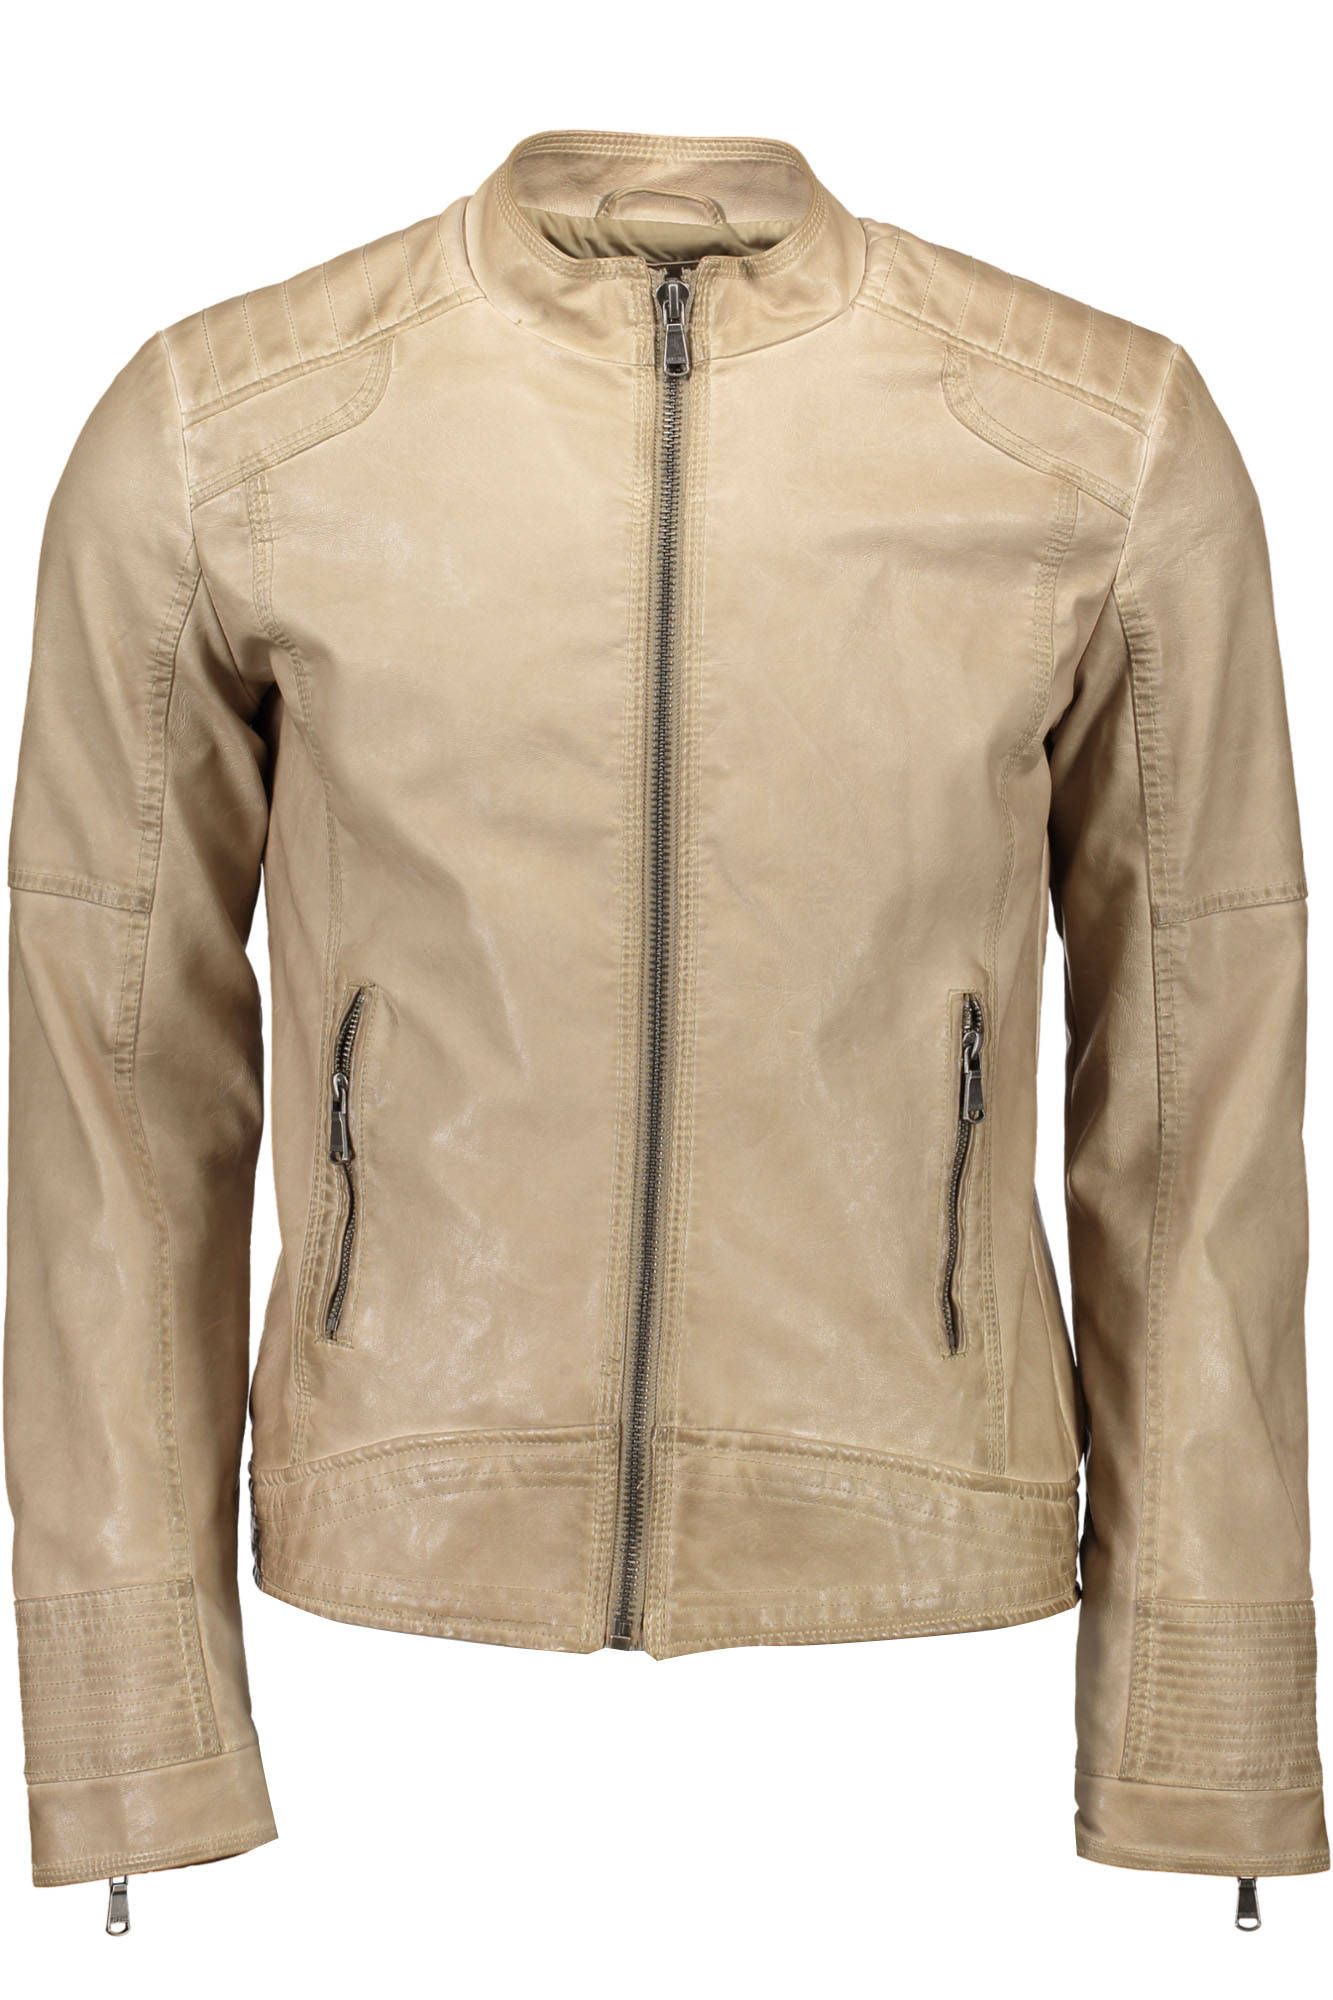 jacket men's YES ZEE beige polyurethane SB972 - ZOOODE.COM